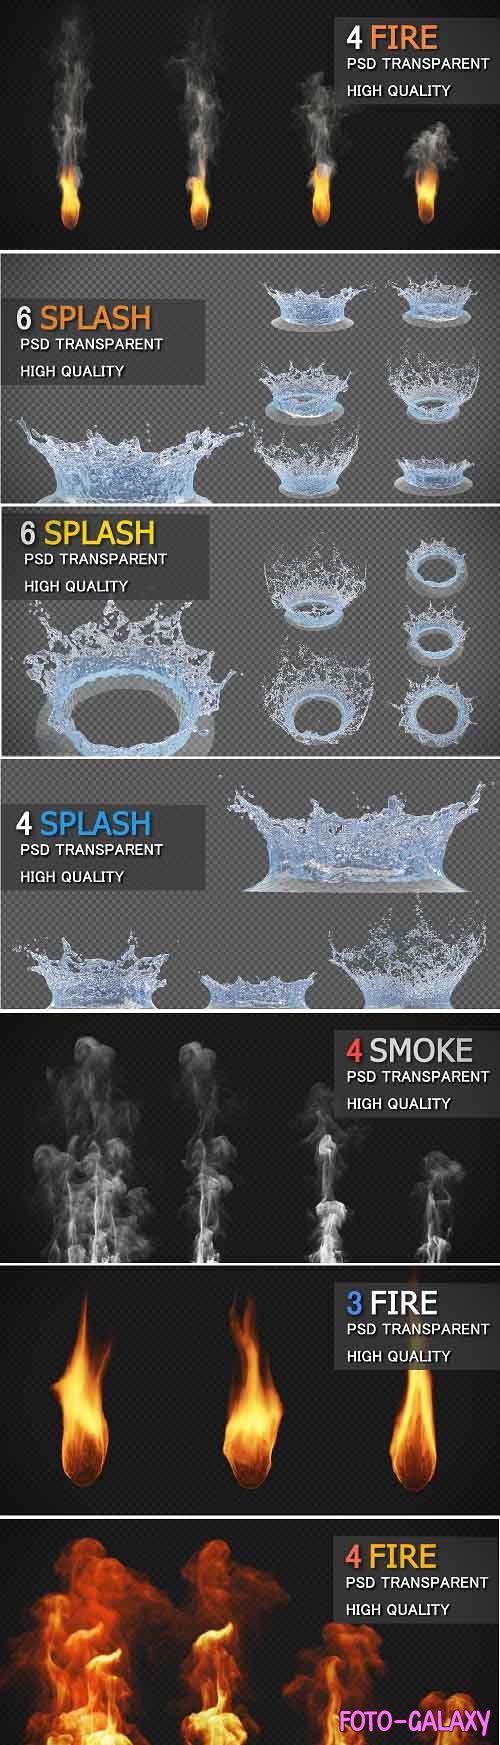 Water - Splash - Fire - Smoke - PSD Transparetnt